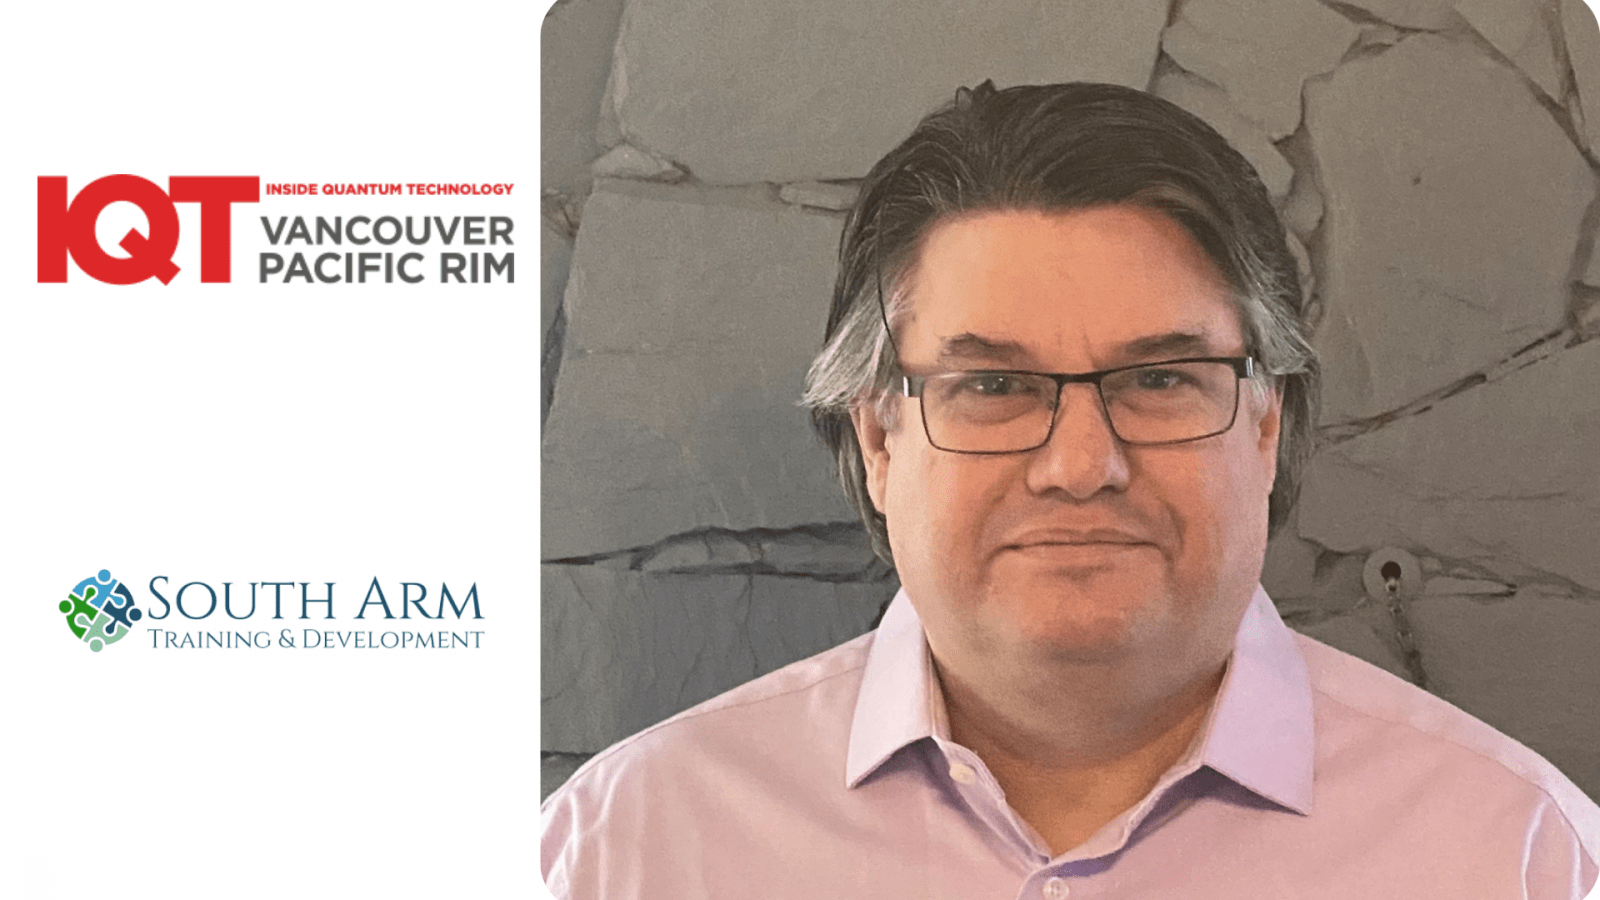 Dennis Green, directeur bij South Arm Training and Development Ltd. is een IQT Vancouver/Pacific Rim-spreker uit 2024 - Inside Quantum Technology